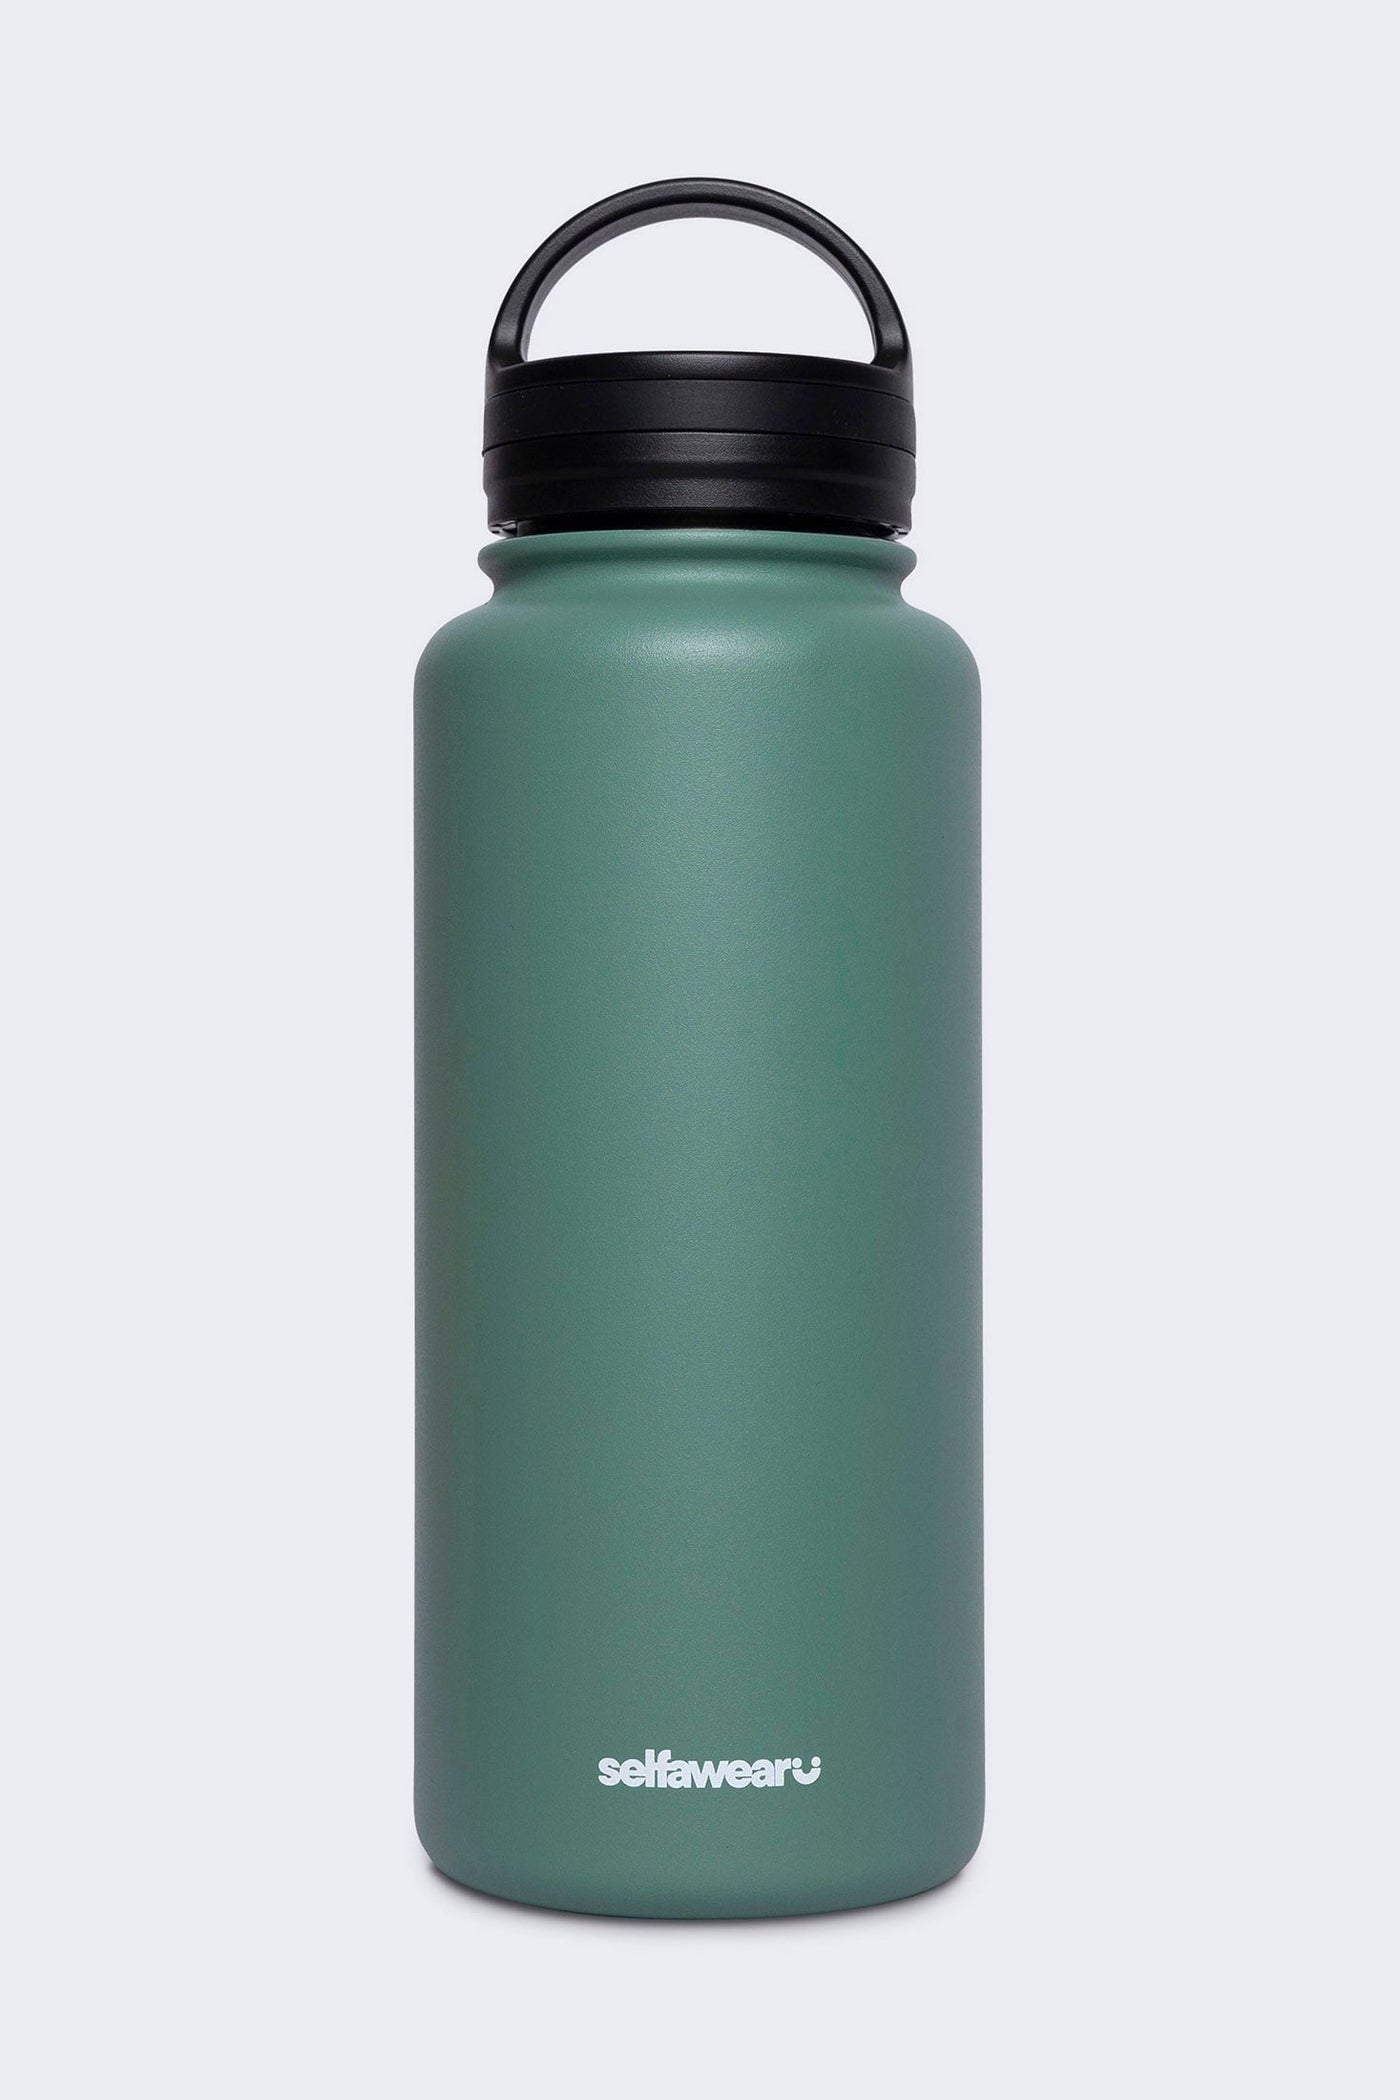 Mint Green Insulated Bottle - 32oz (1L) Insulated Water Bottle Selfawear 